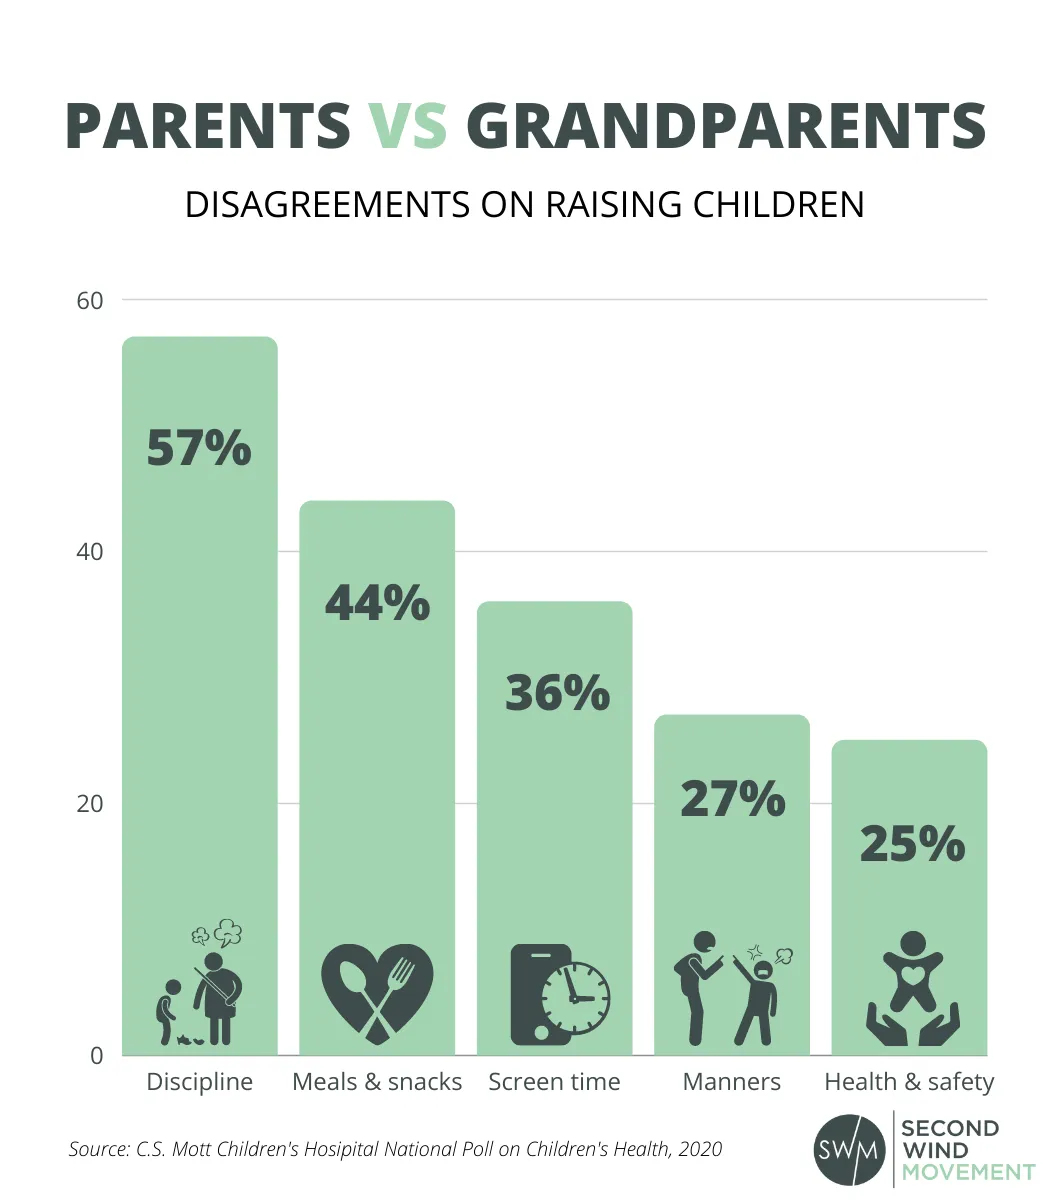 parents vs grandparents - the main disagreements on raising children: